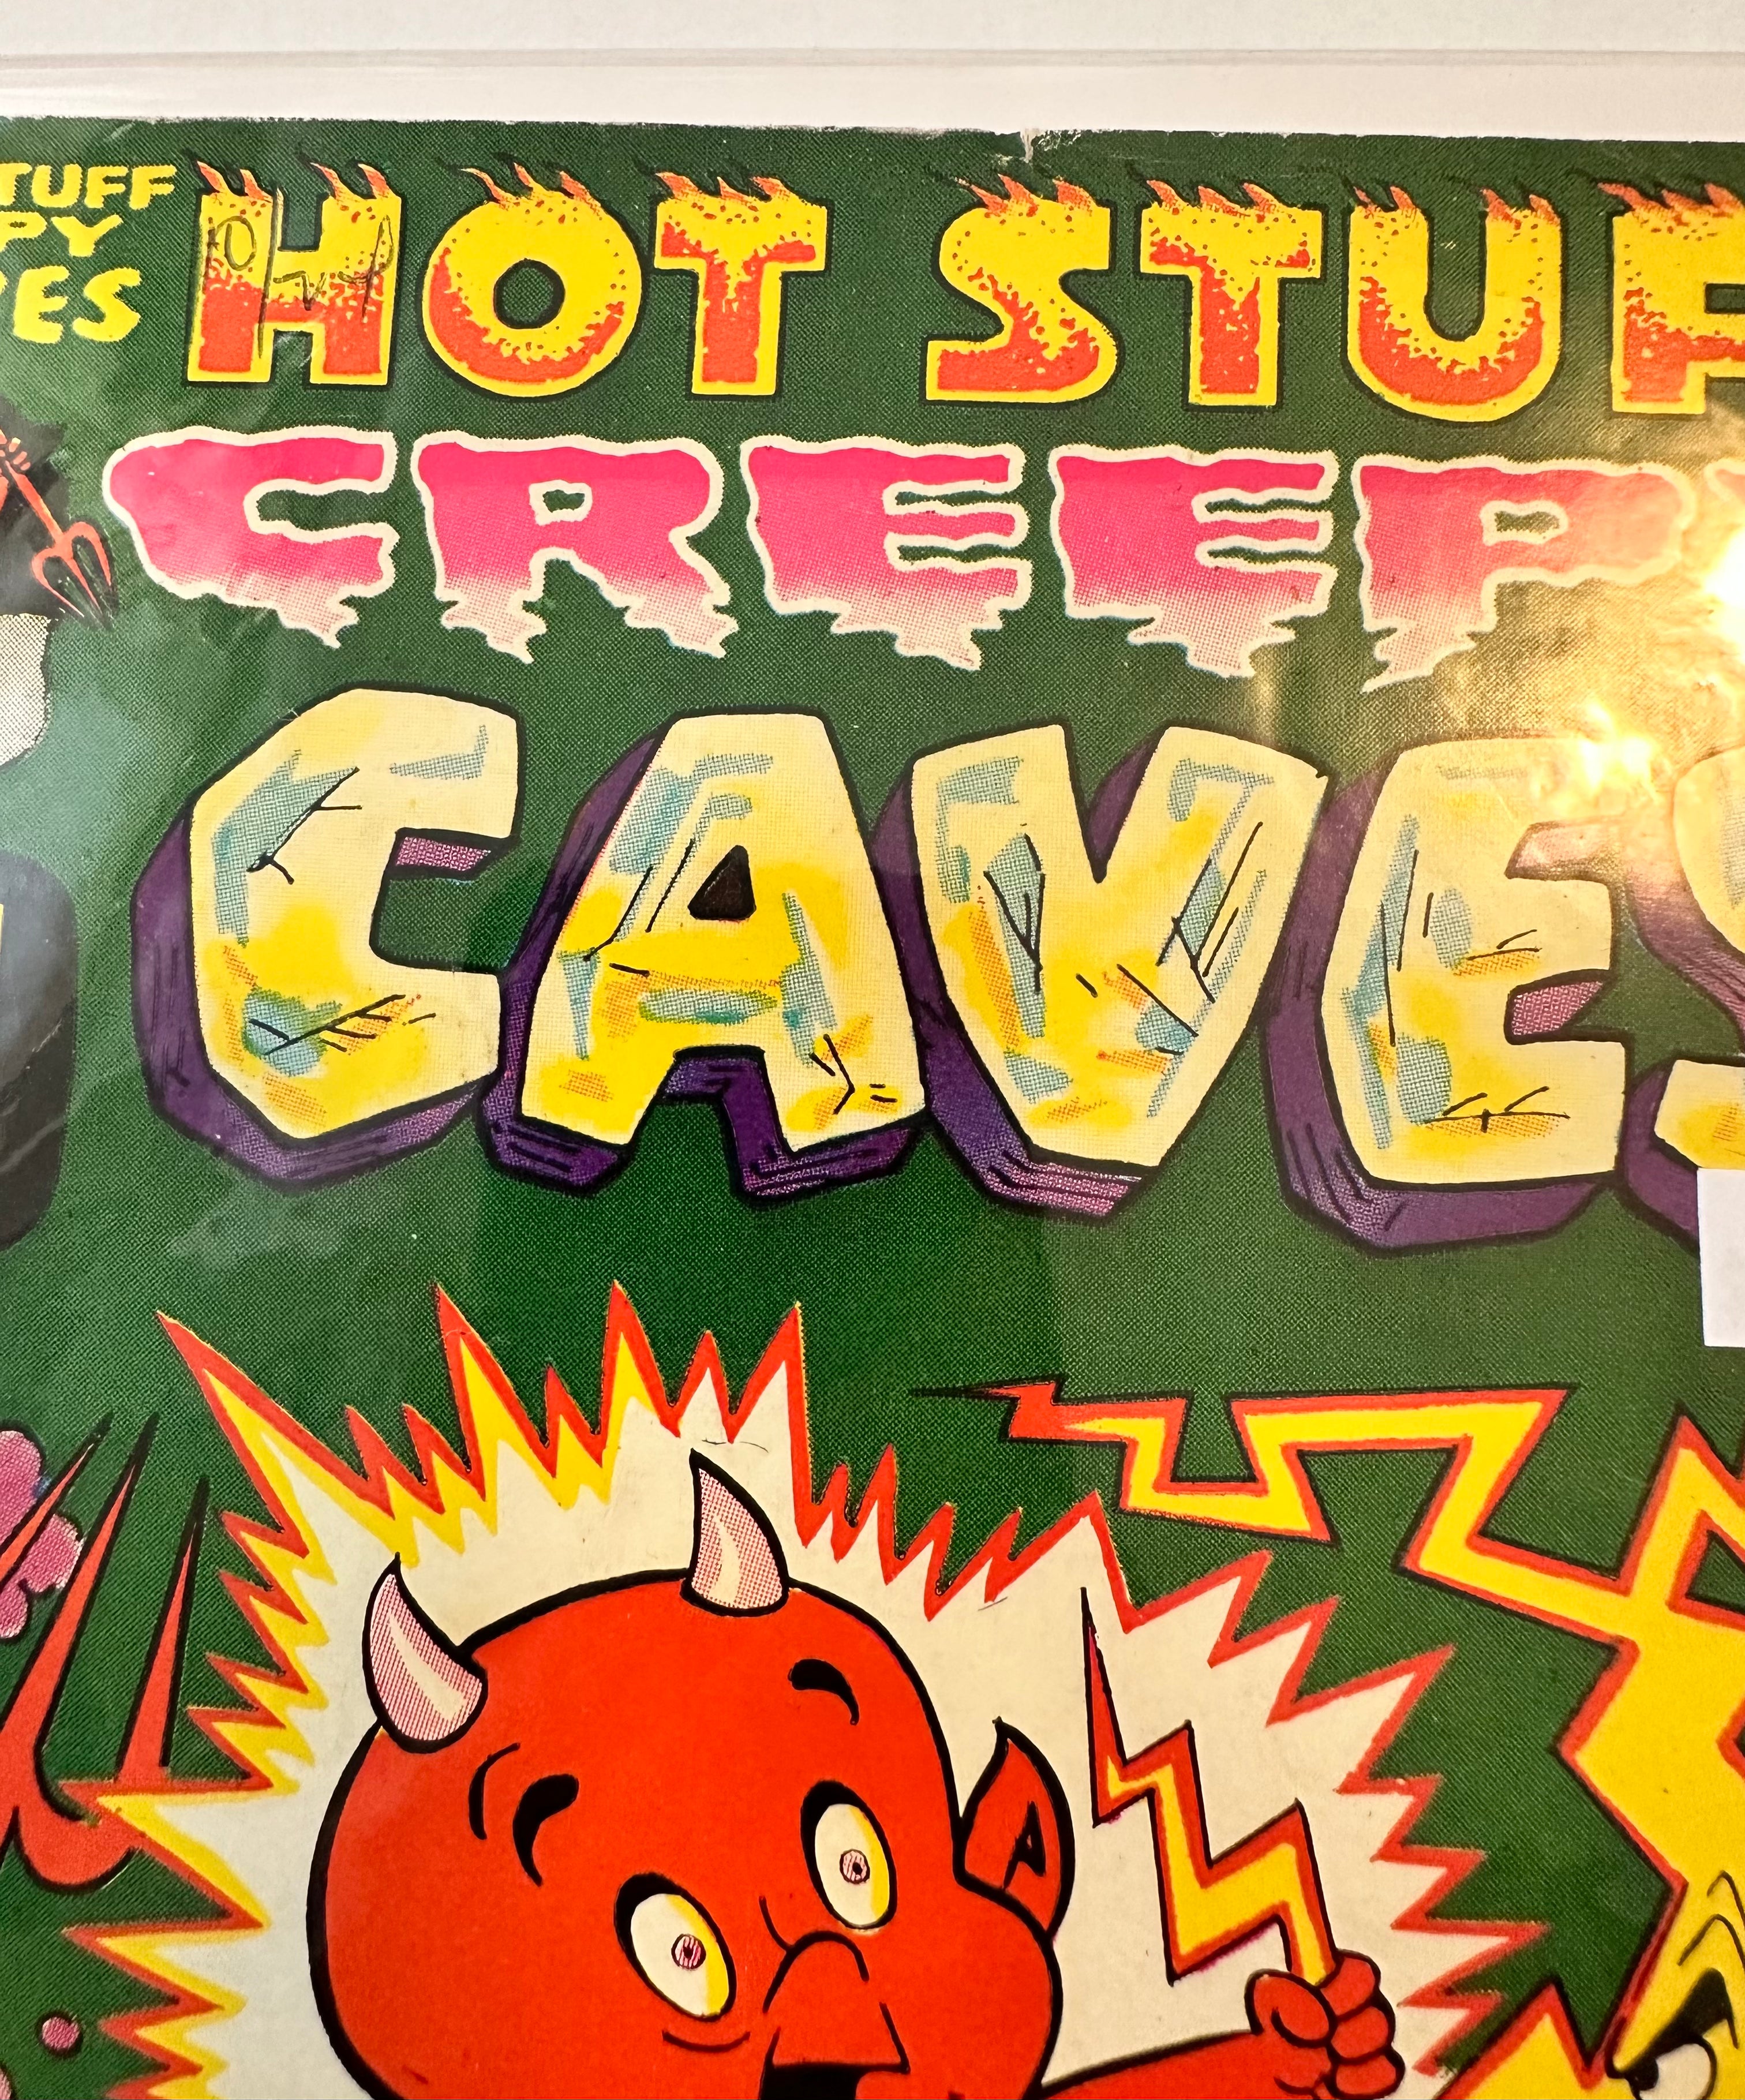 Hot Stuff Creepy caves #2 comics vg 1975